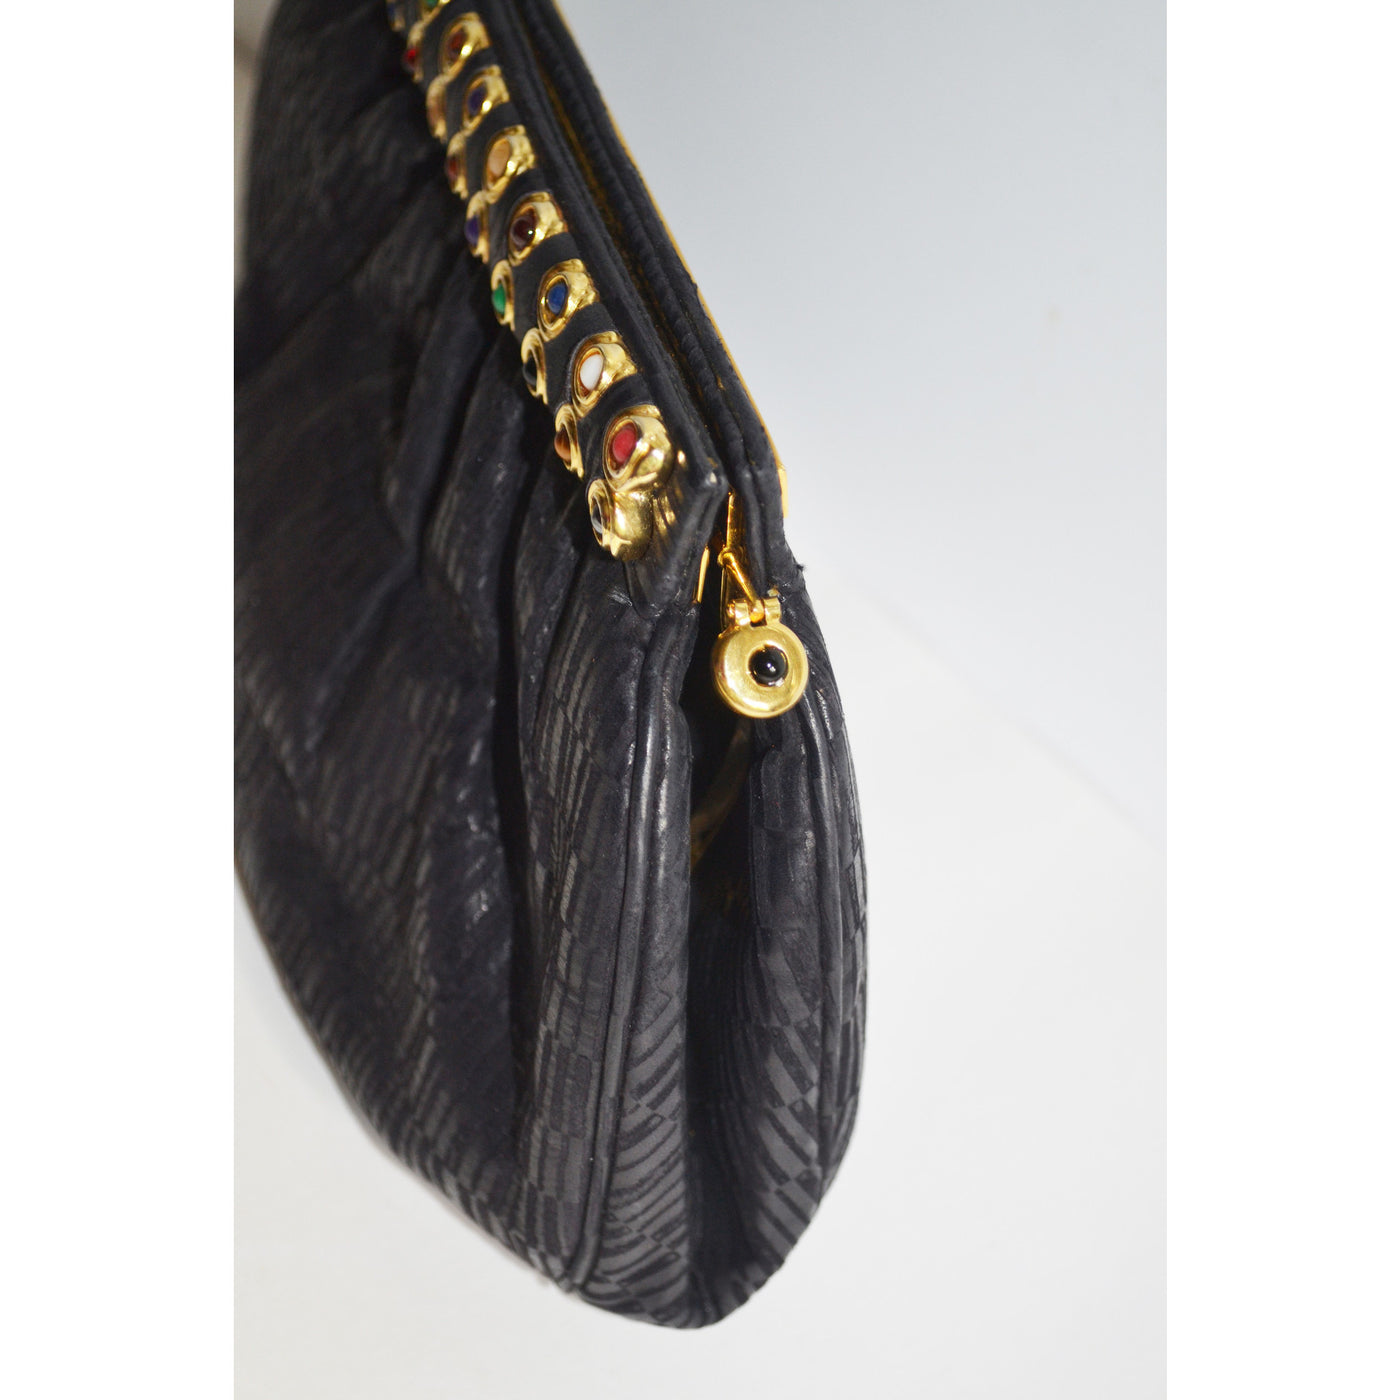 Vintage Black Leather Jeweled Clutch Purse By Ashneil 